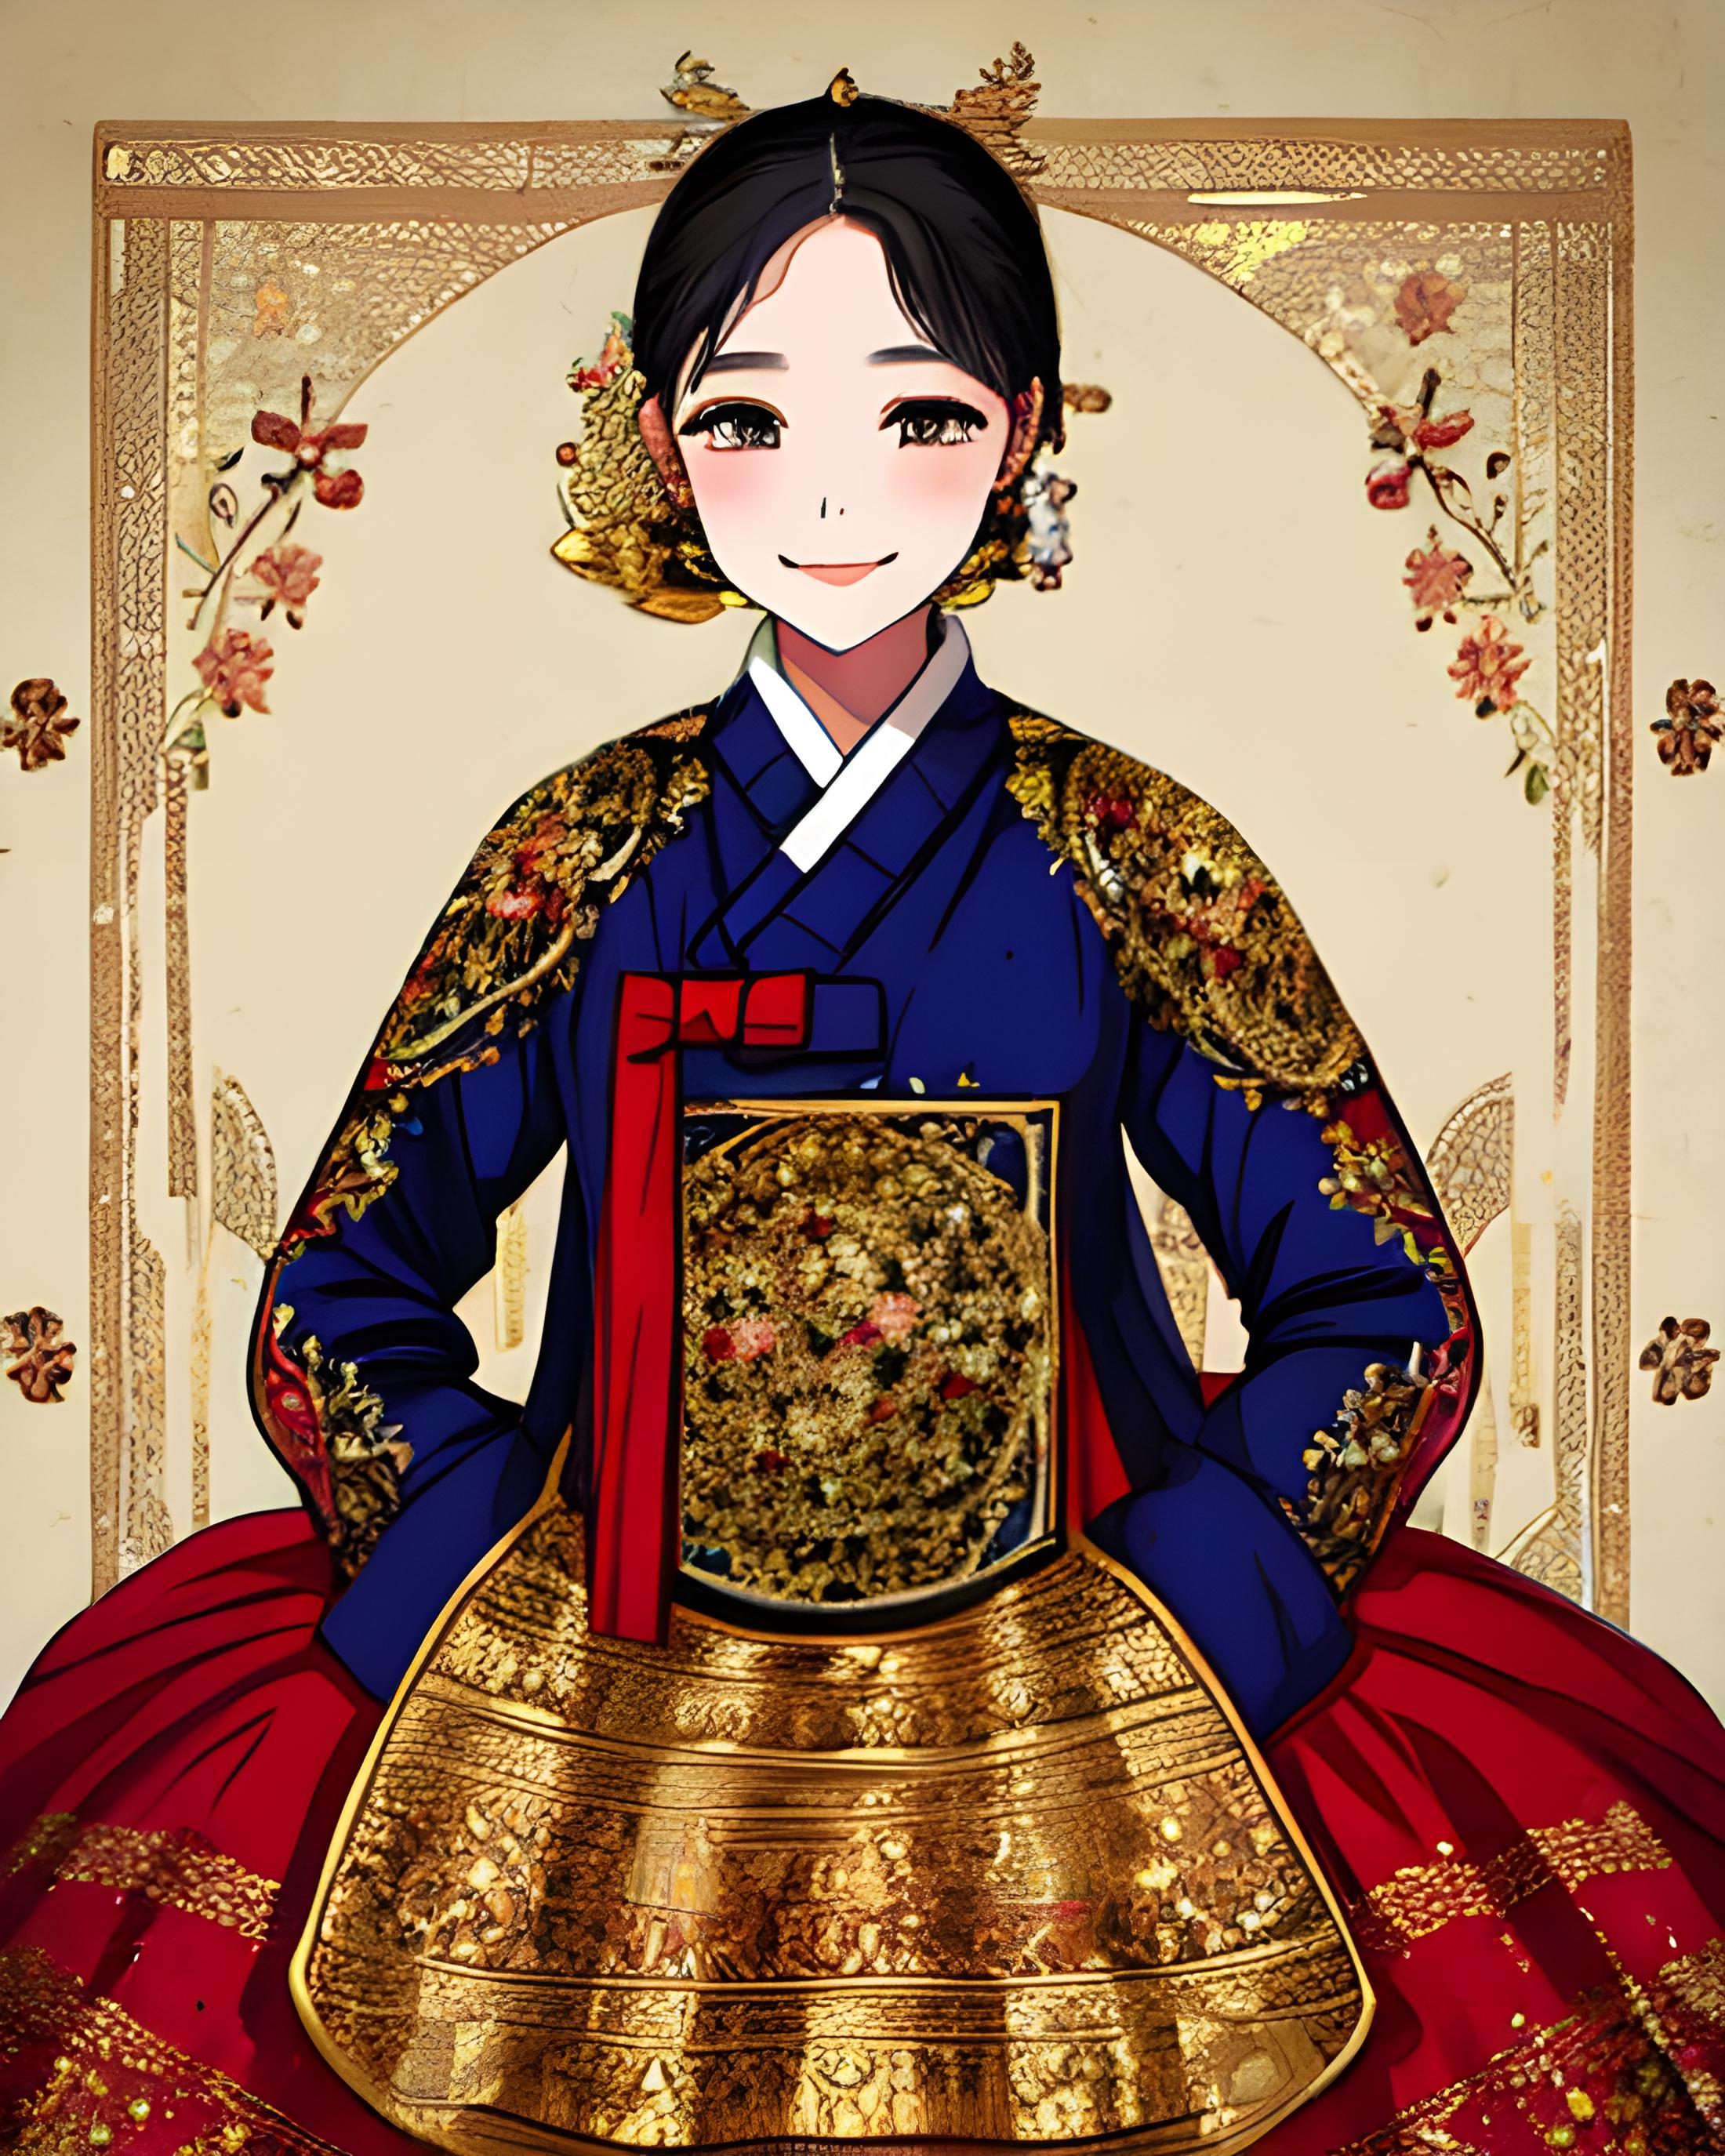 Dangui Hanbok - Joseon Era Korean Clothing image by KimiKoro